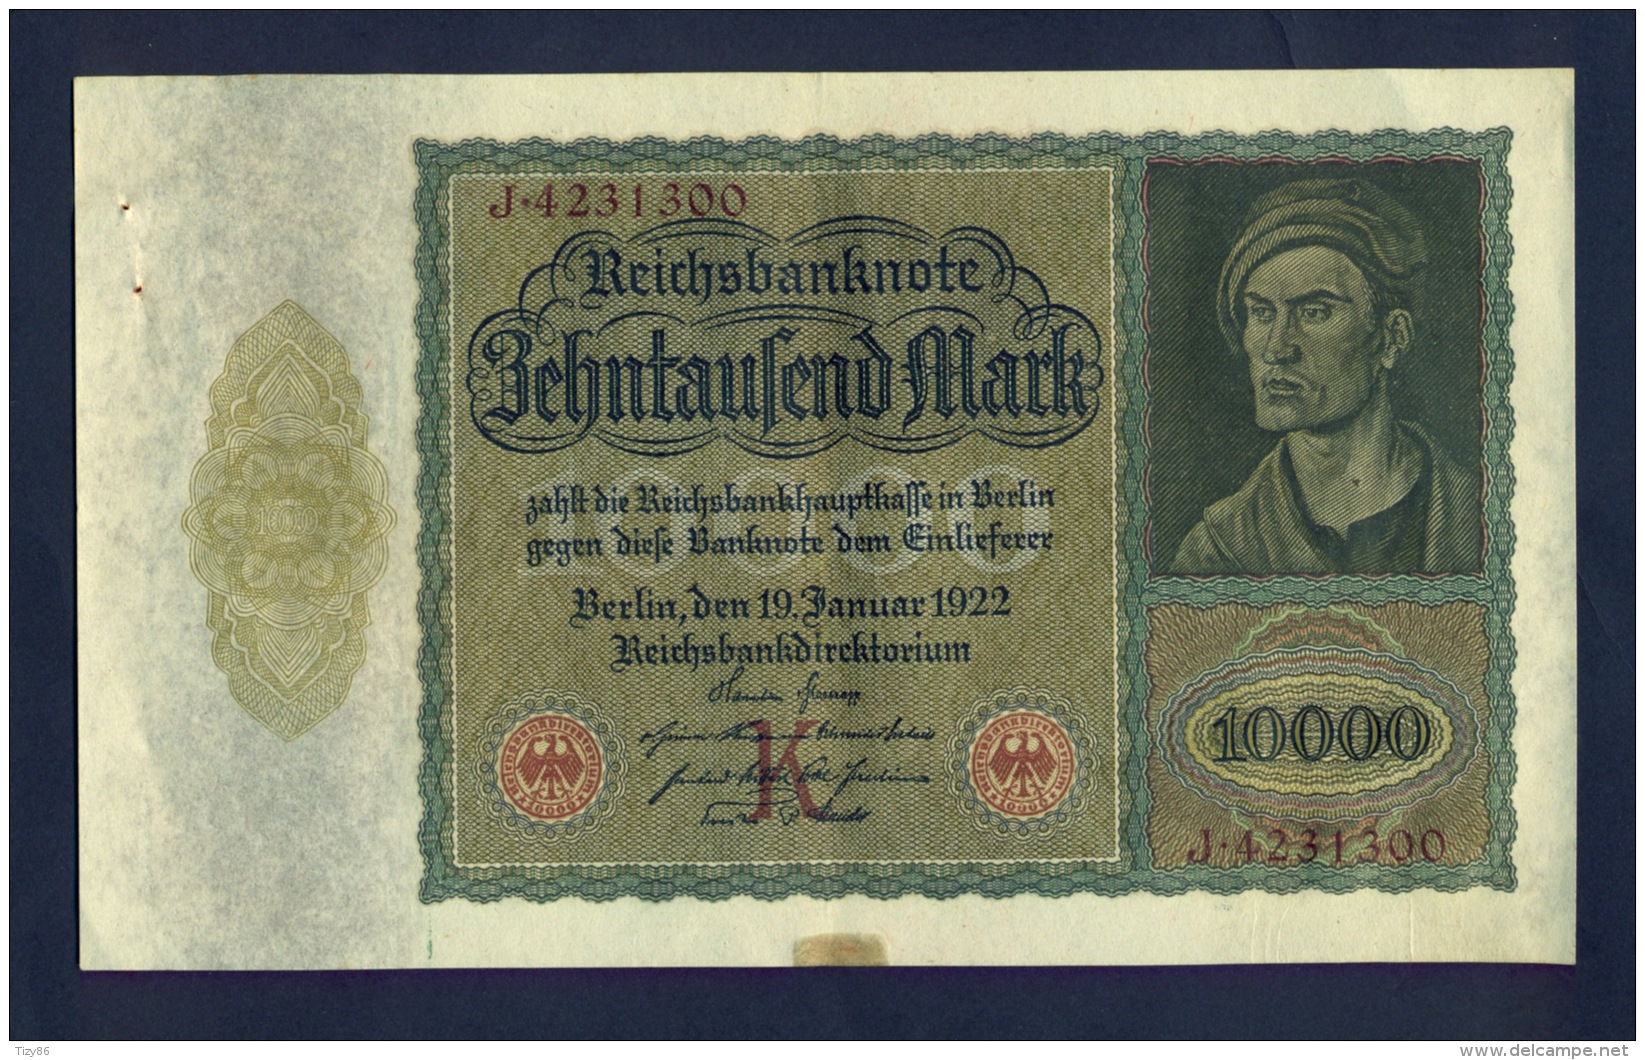 Banconota Germania 10.000 Mark - Te Identificeren